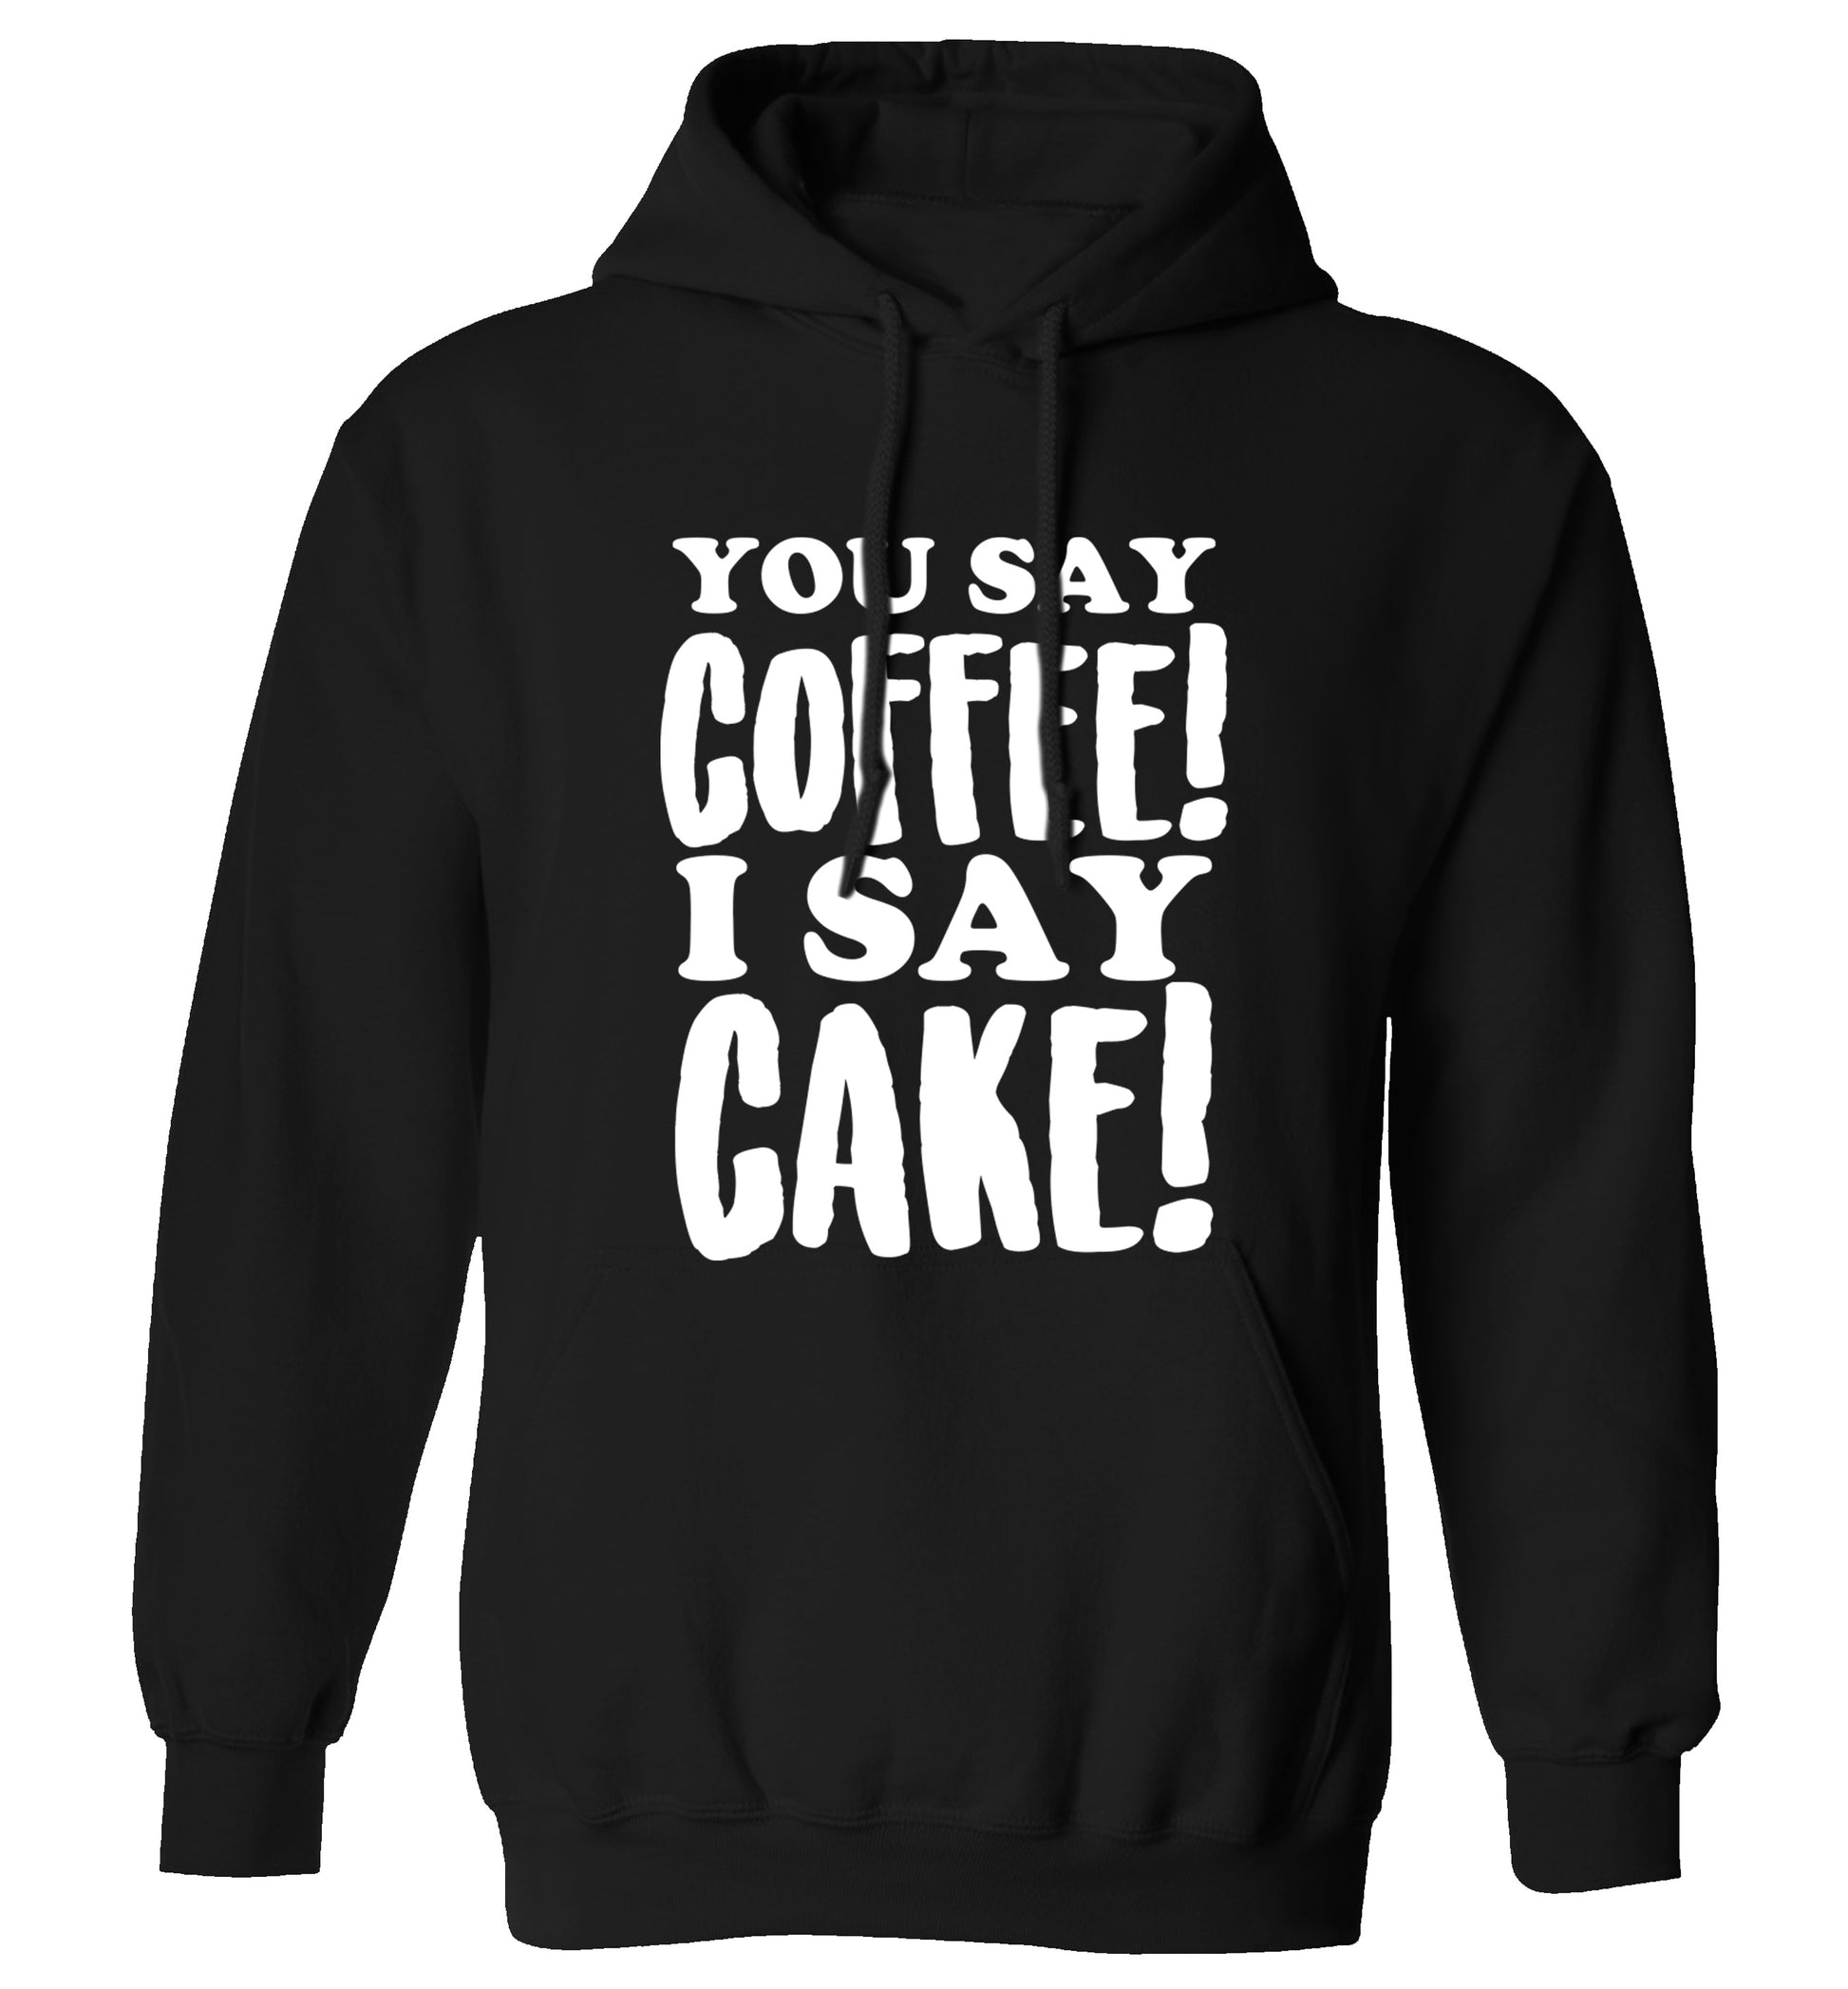 You say coffee I say cake! adults unisex black hoodie 2XL